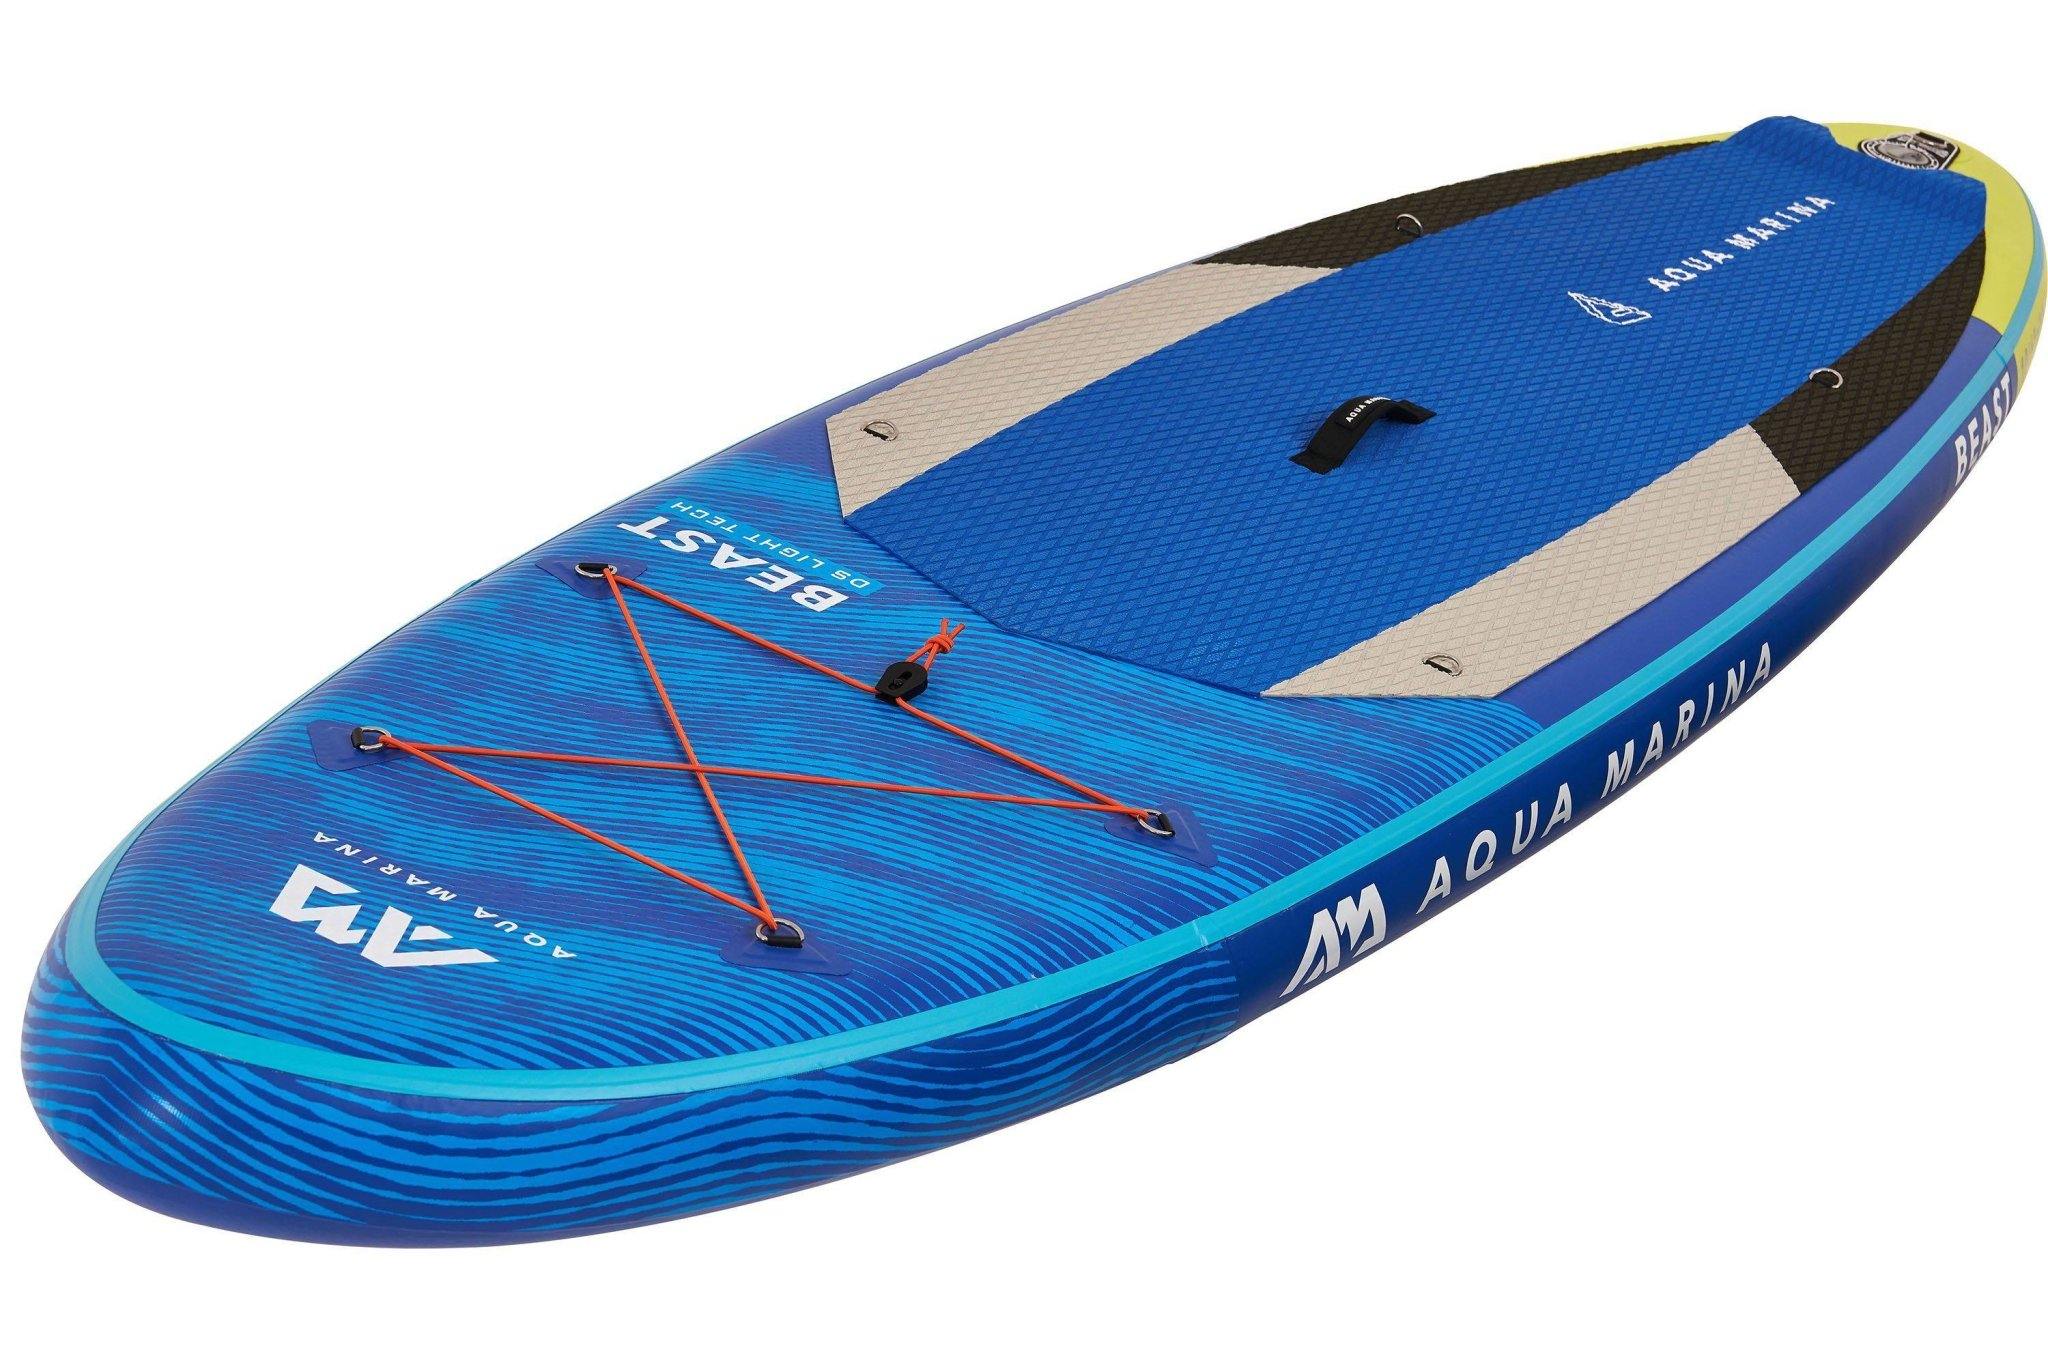 Beast Advanced All-Around iSUP Paddle Board - Dti Direct USA